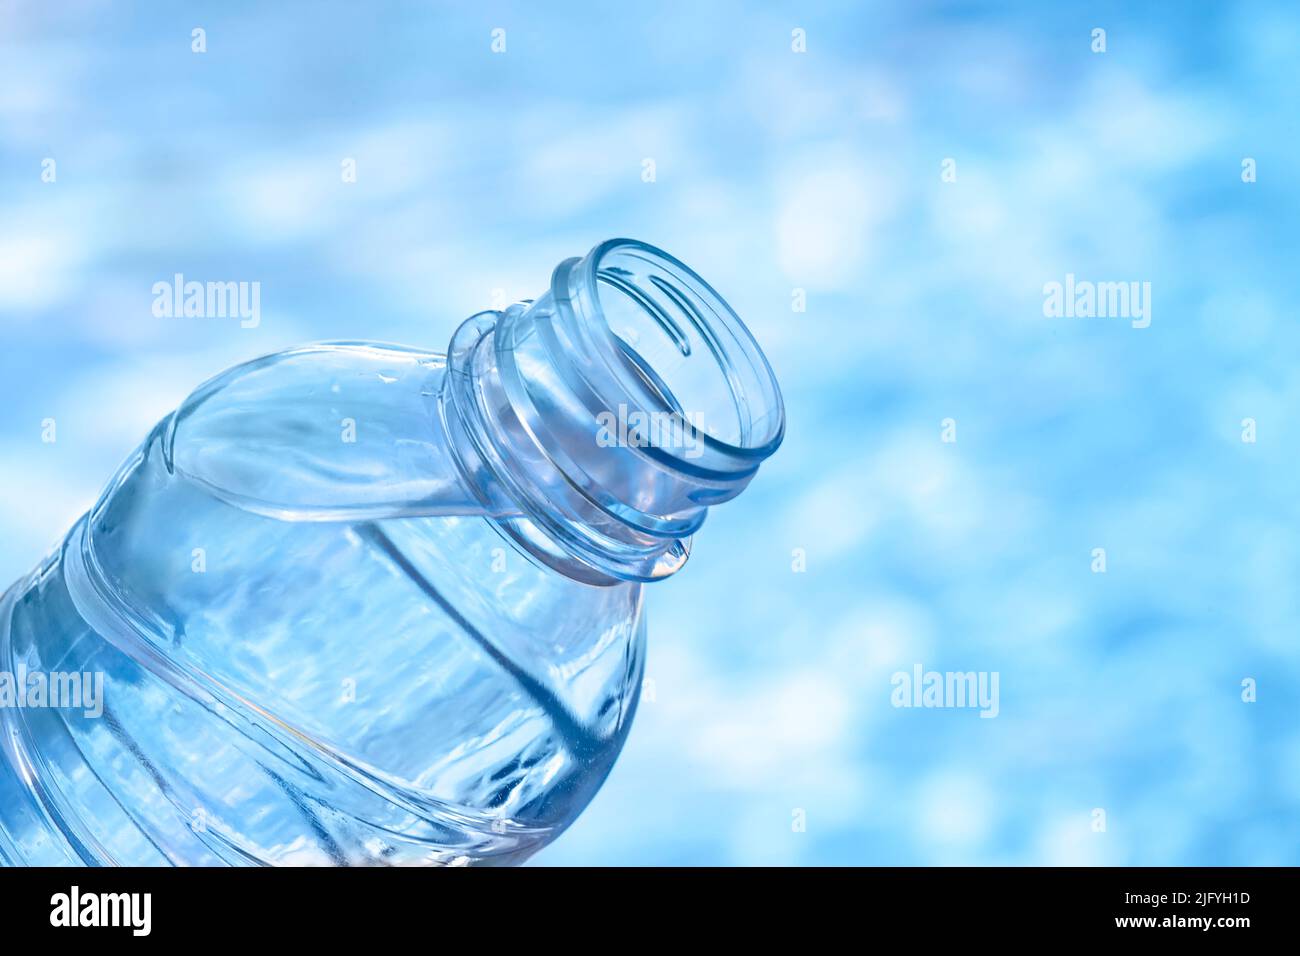 Water plastic bottle against blue background Stock Photo